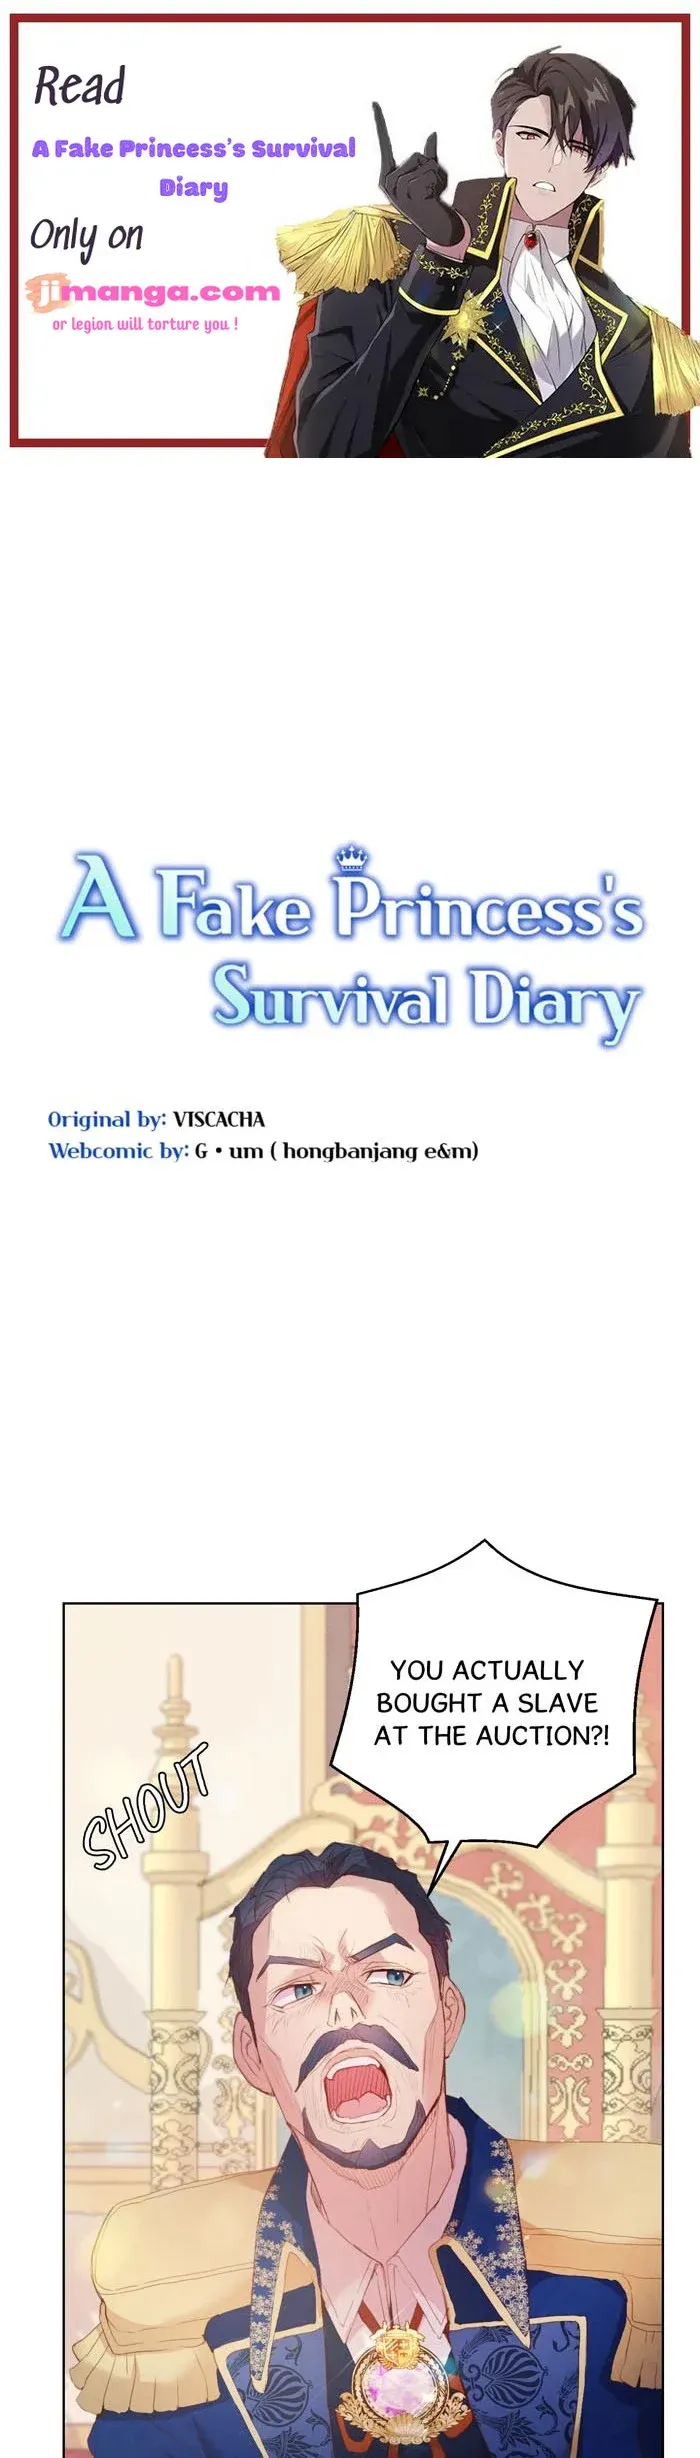 A Fake Princess’S Survival Diary - Page 1